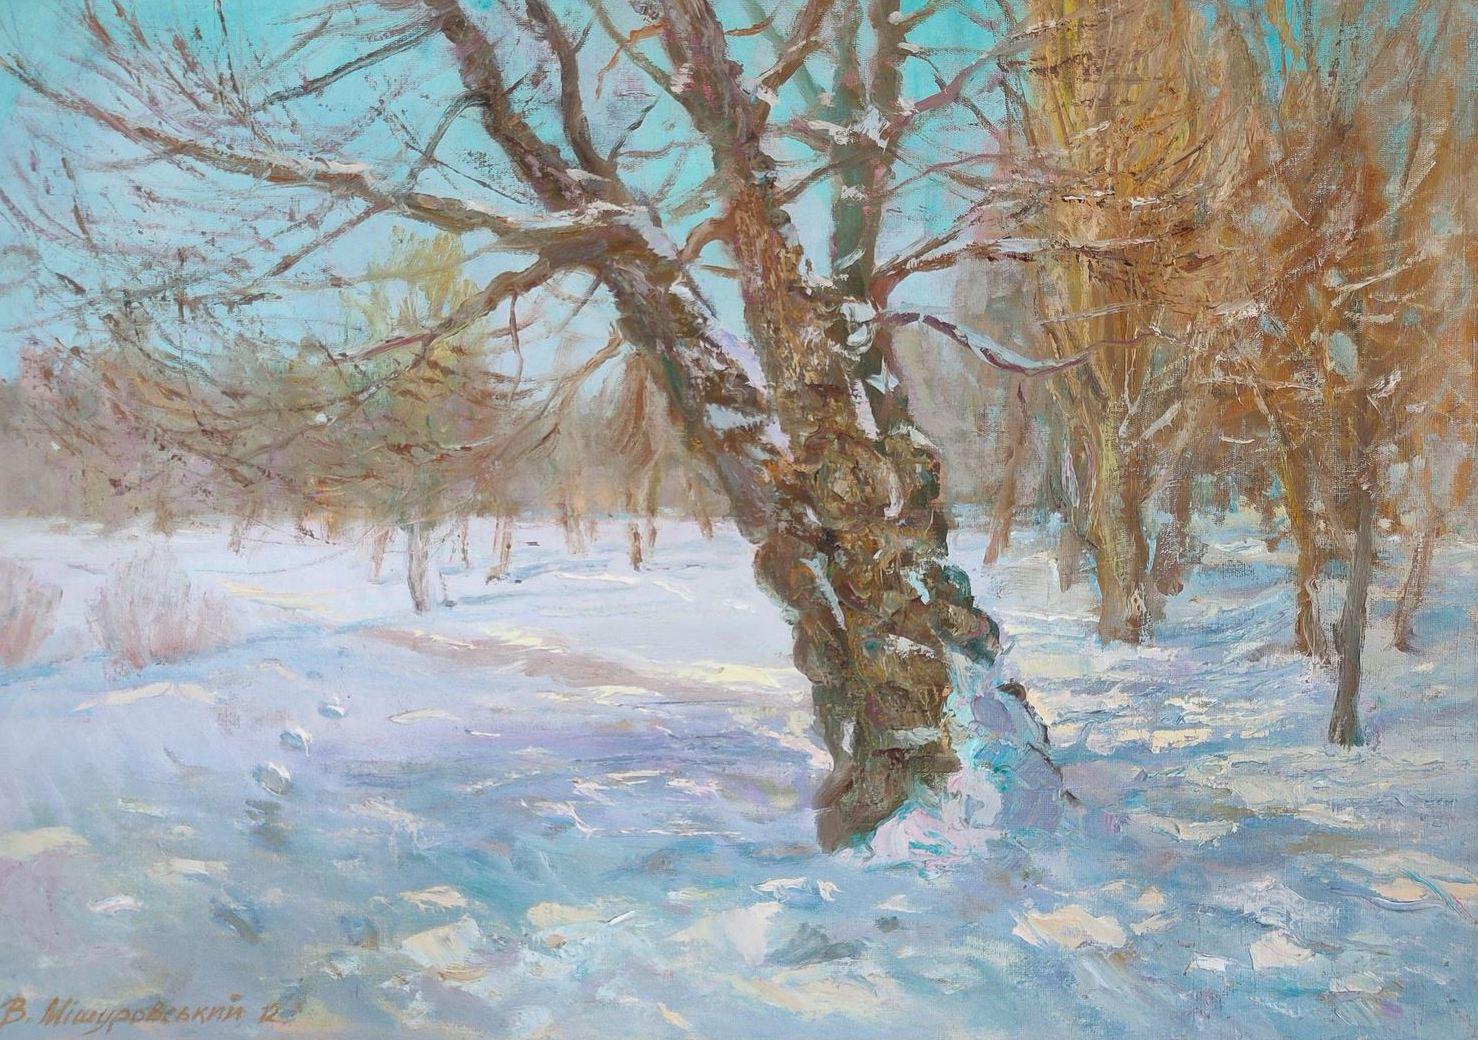 Mishurovskiy V. Landscape Painting – Schnee und Sonne, Original Ölgemälde, hängefertig